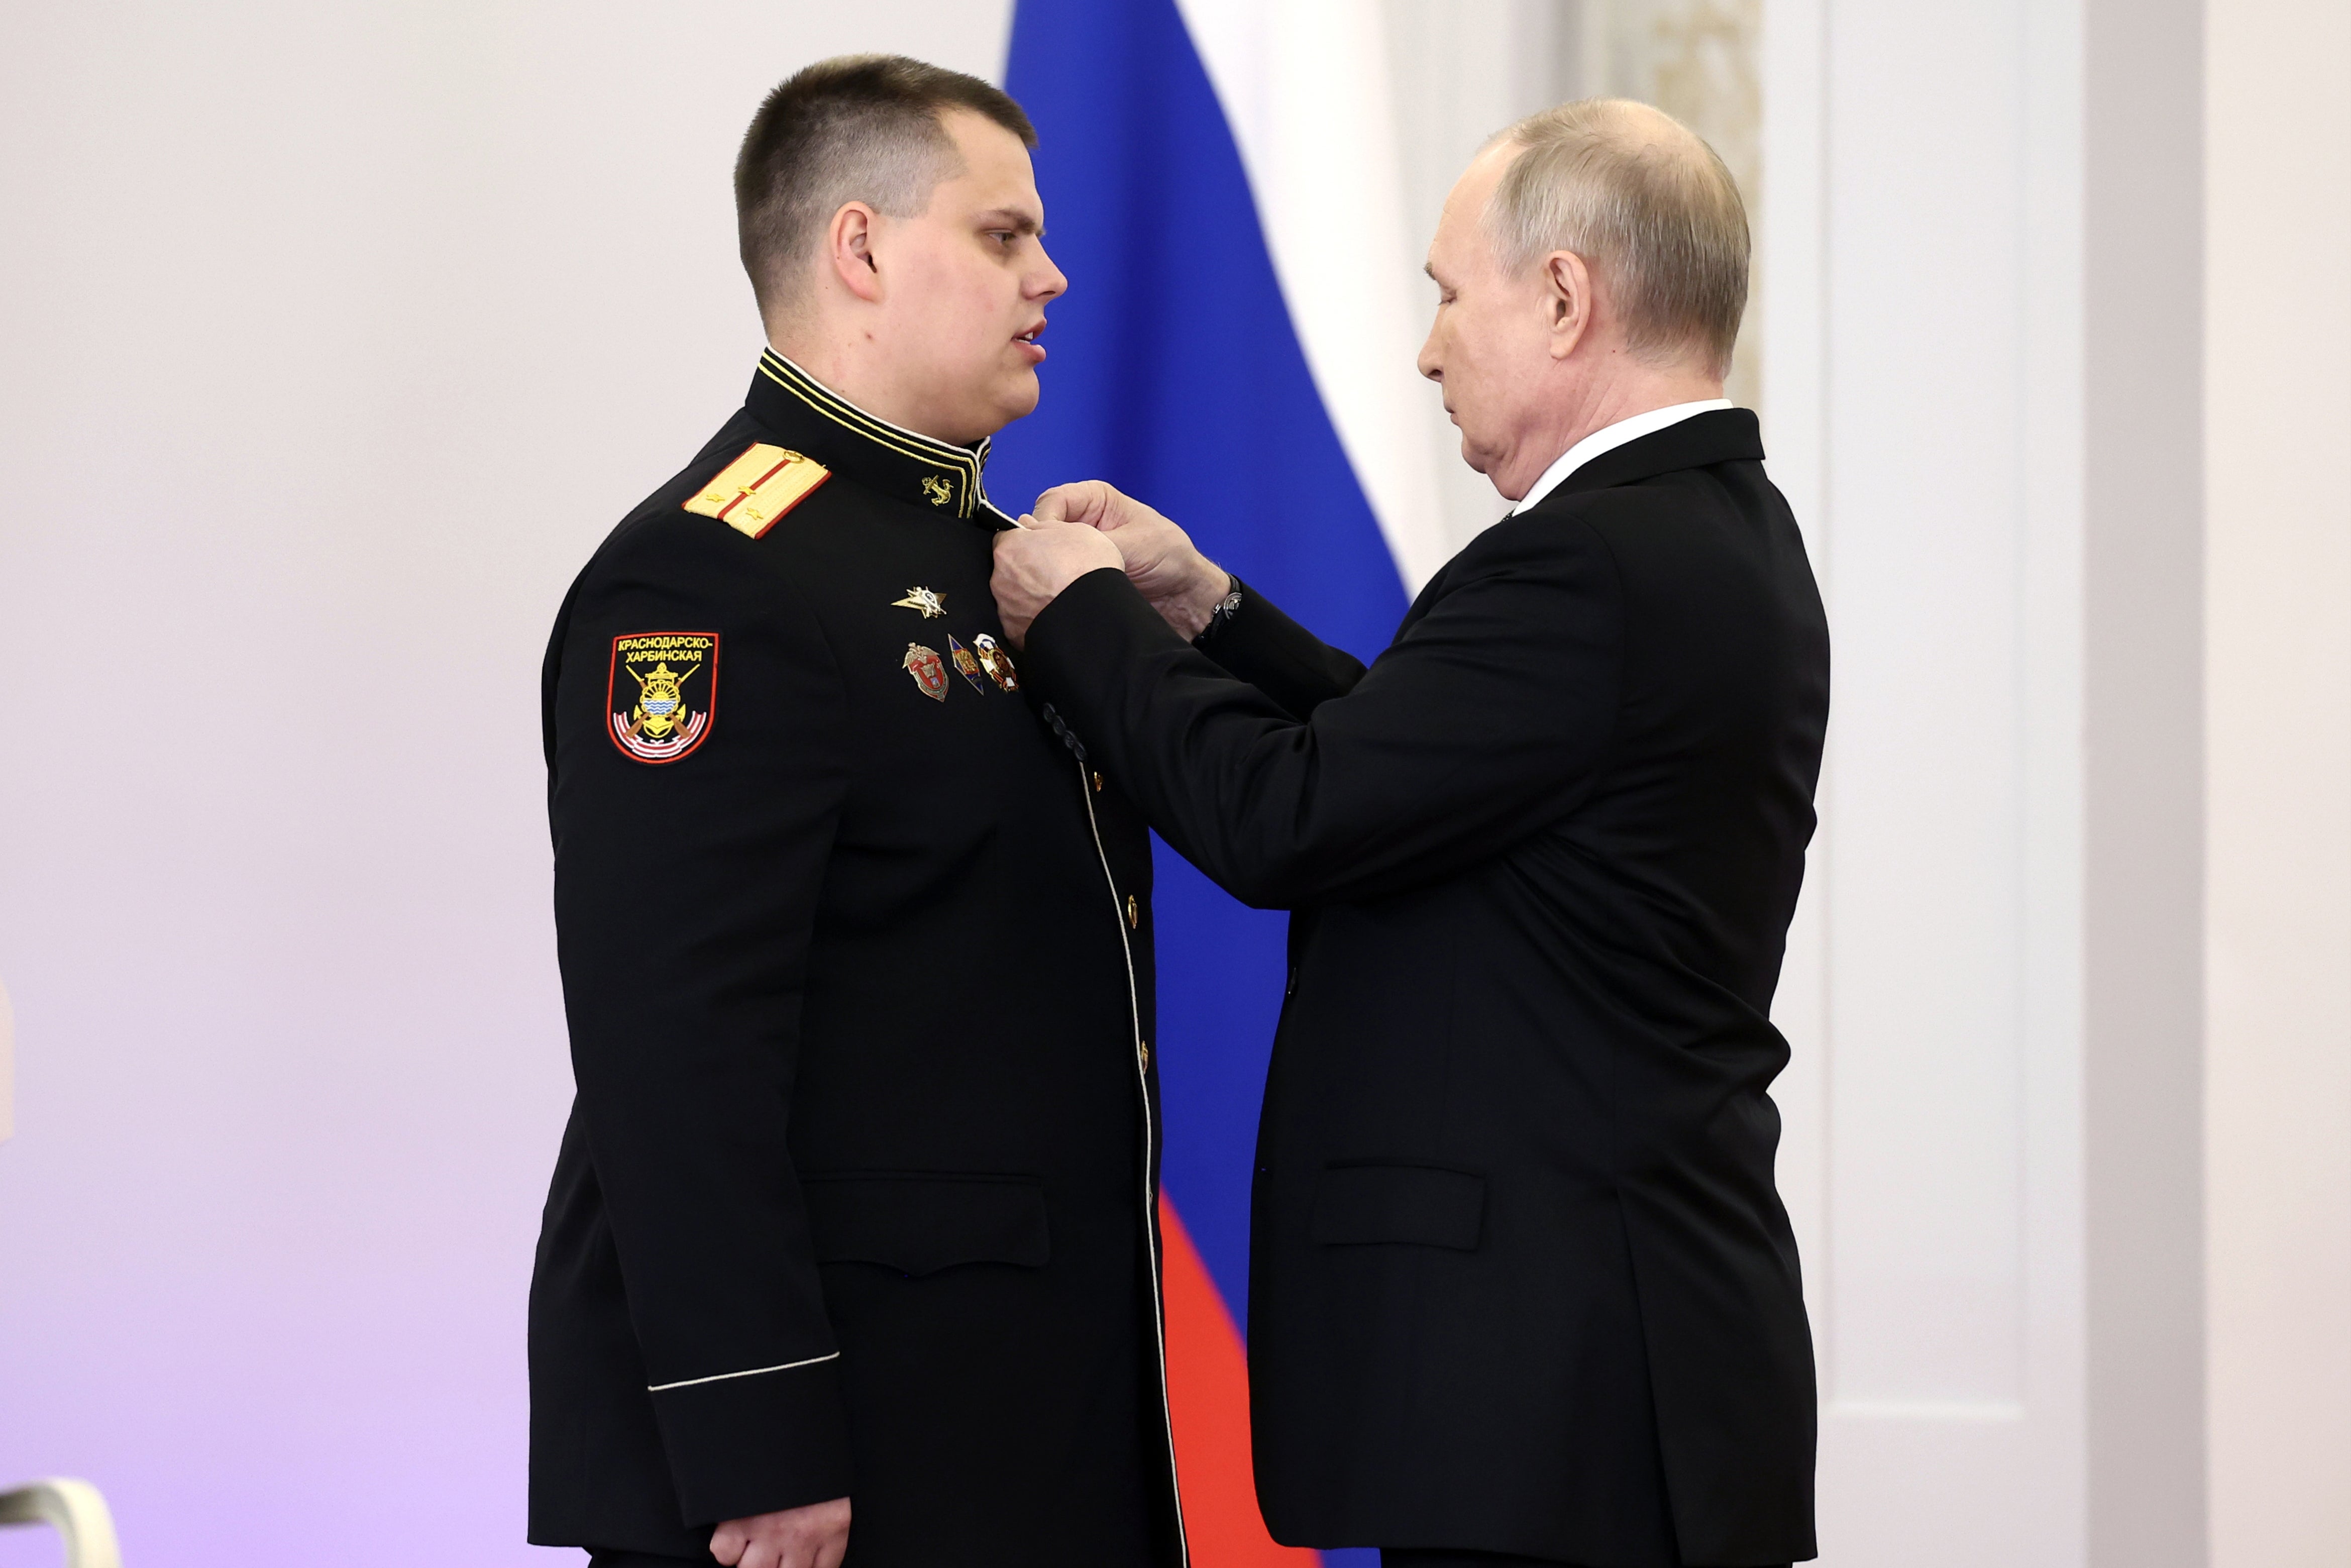 Putin presents Senior Lieutenant Eduard Kazimov with a medal at the Grand Kremlin Palace yesterday